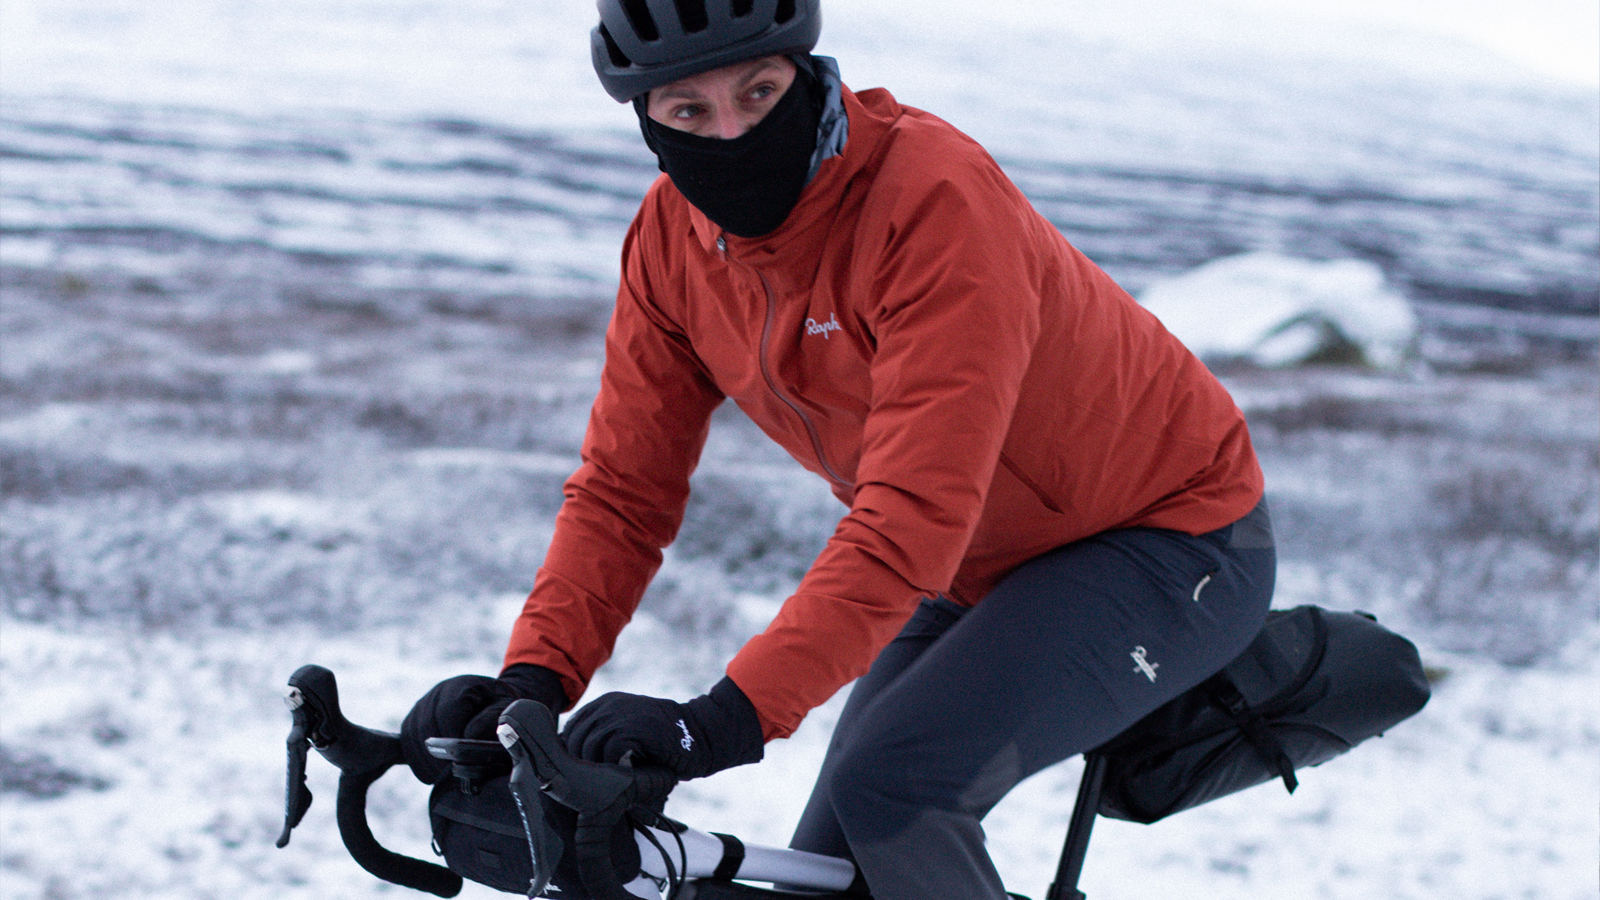 Rapha adds new bad-weather bikepacking clothing to its Explore range